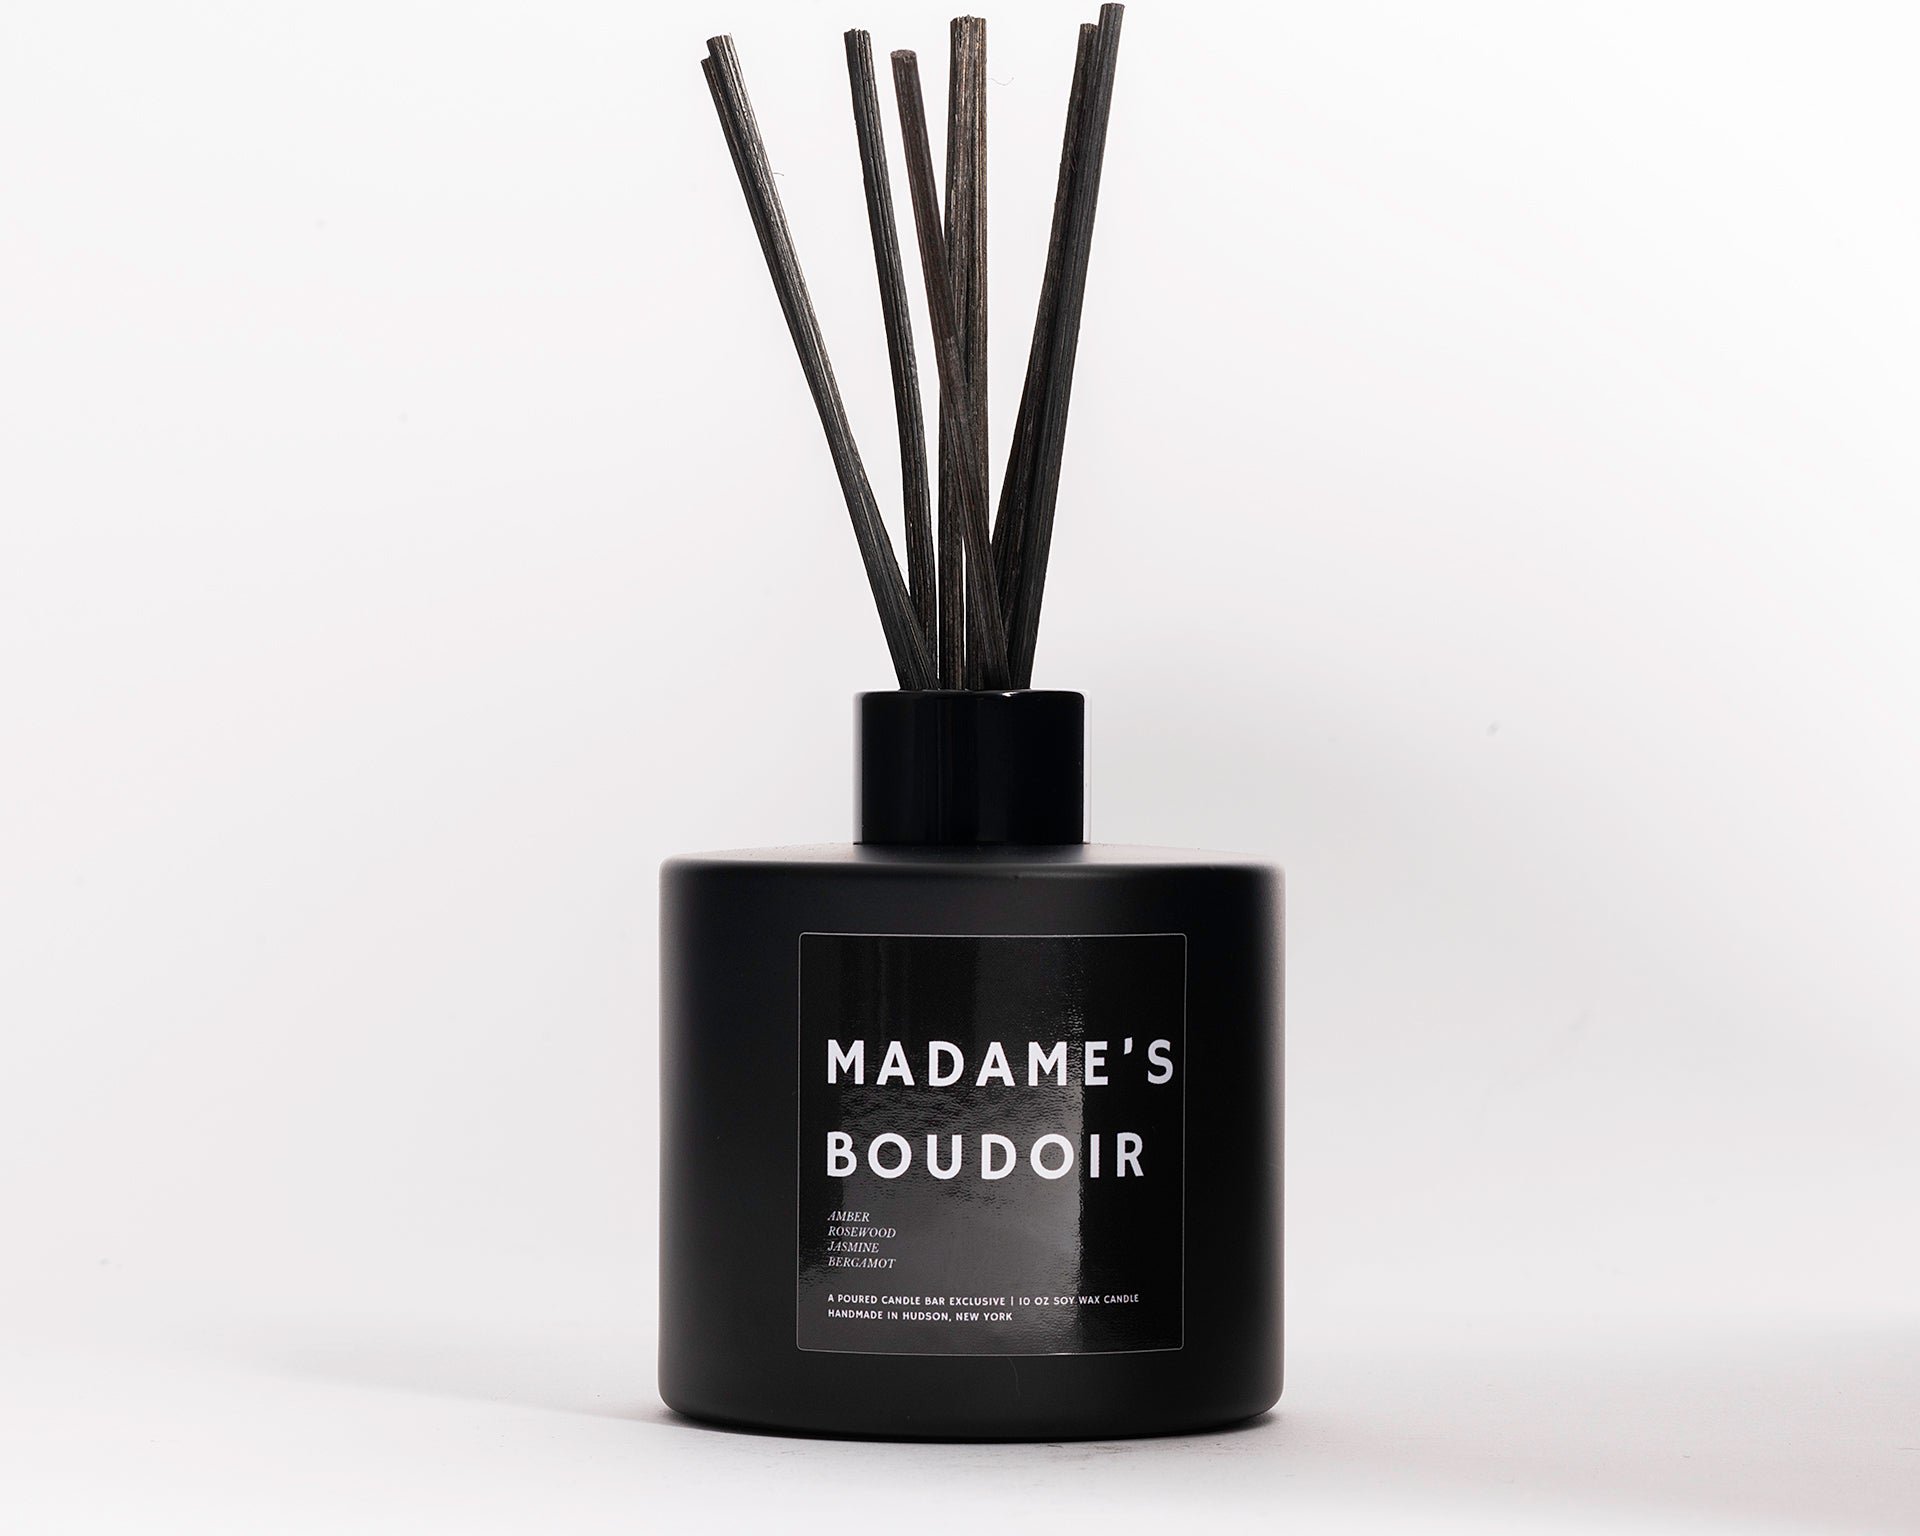 The Madame's Boudoir - Poured Candle Bar